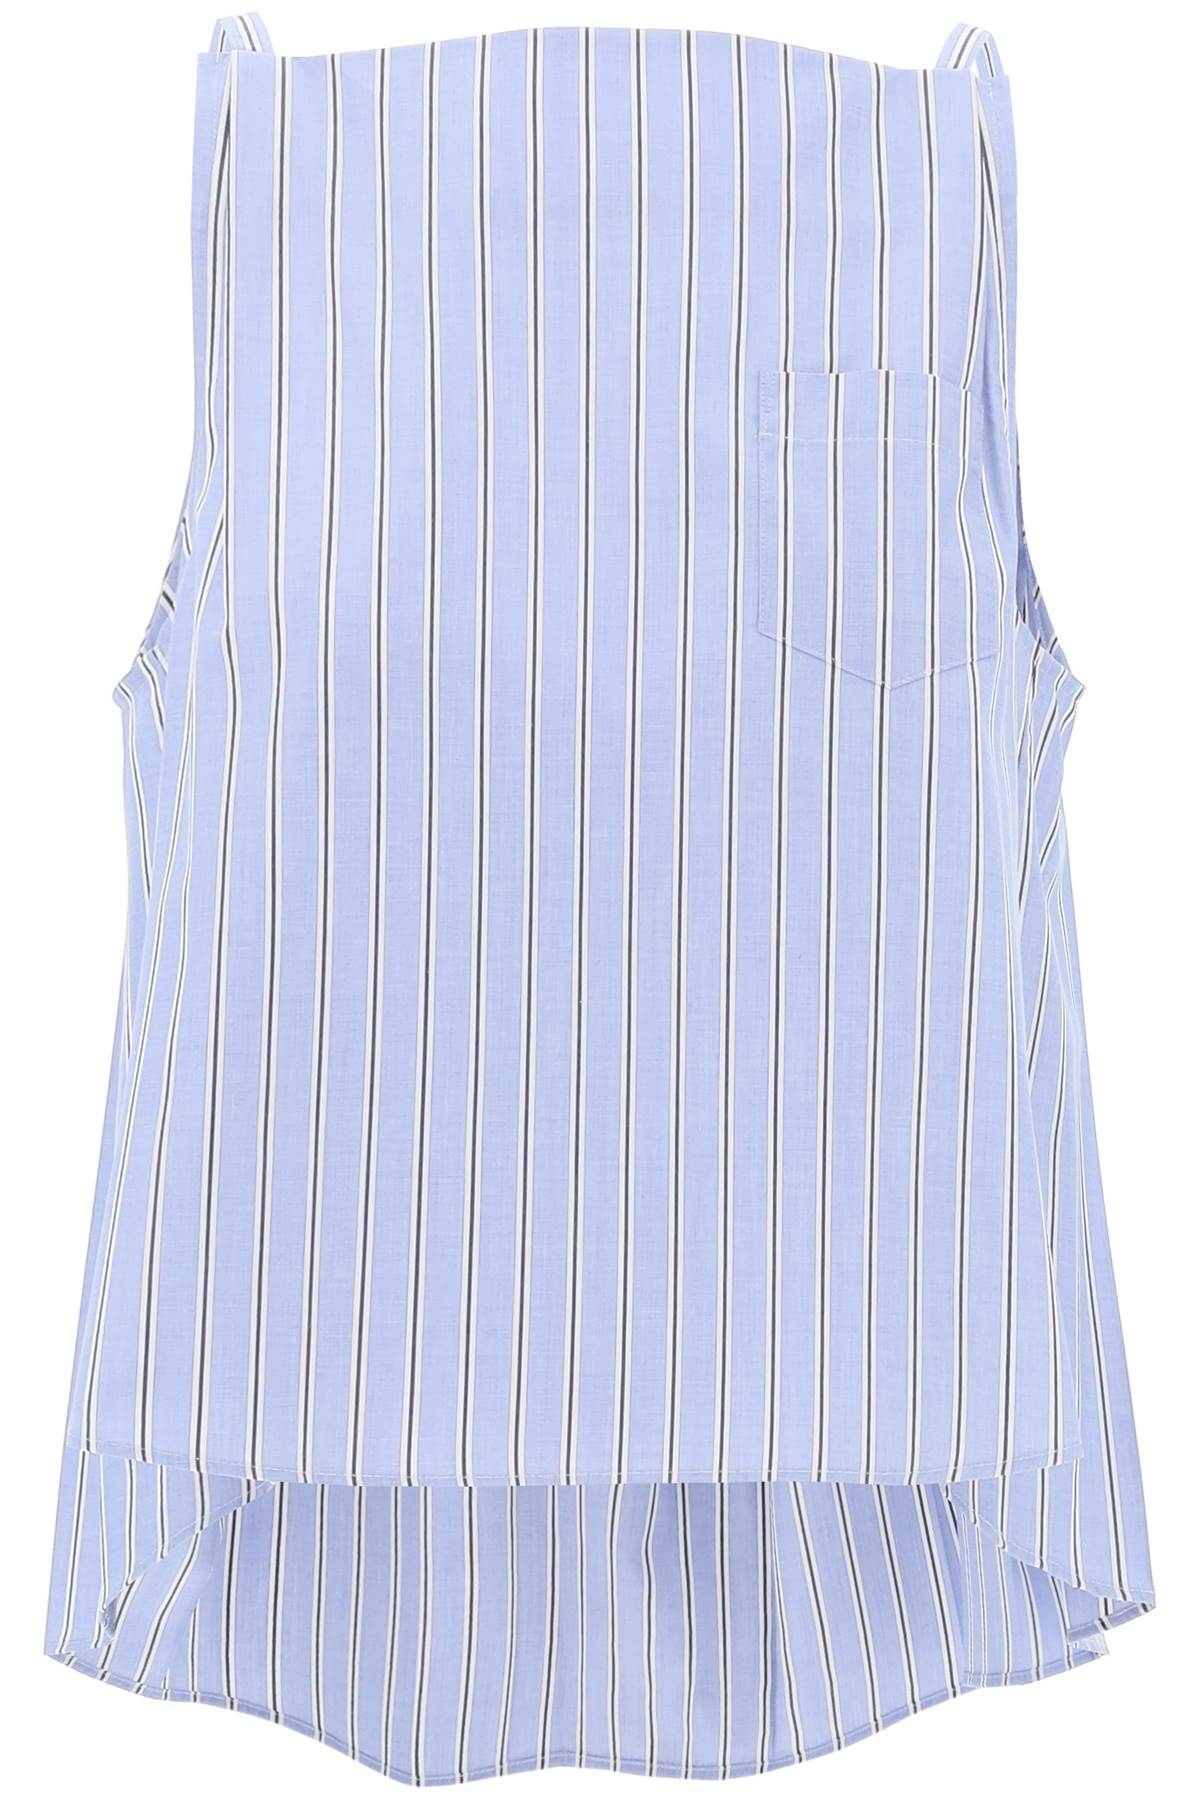 Sacai striped sleeveless top in poplin-0